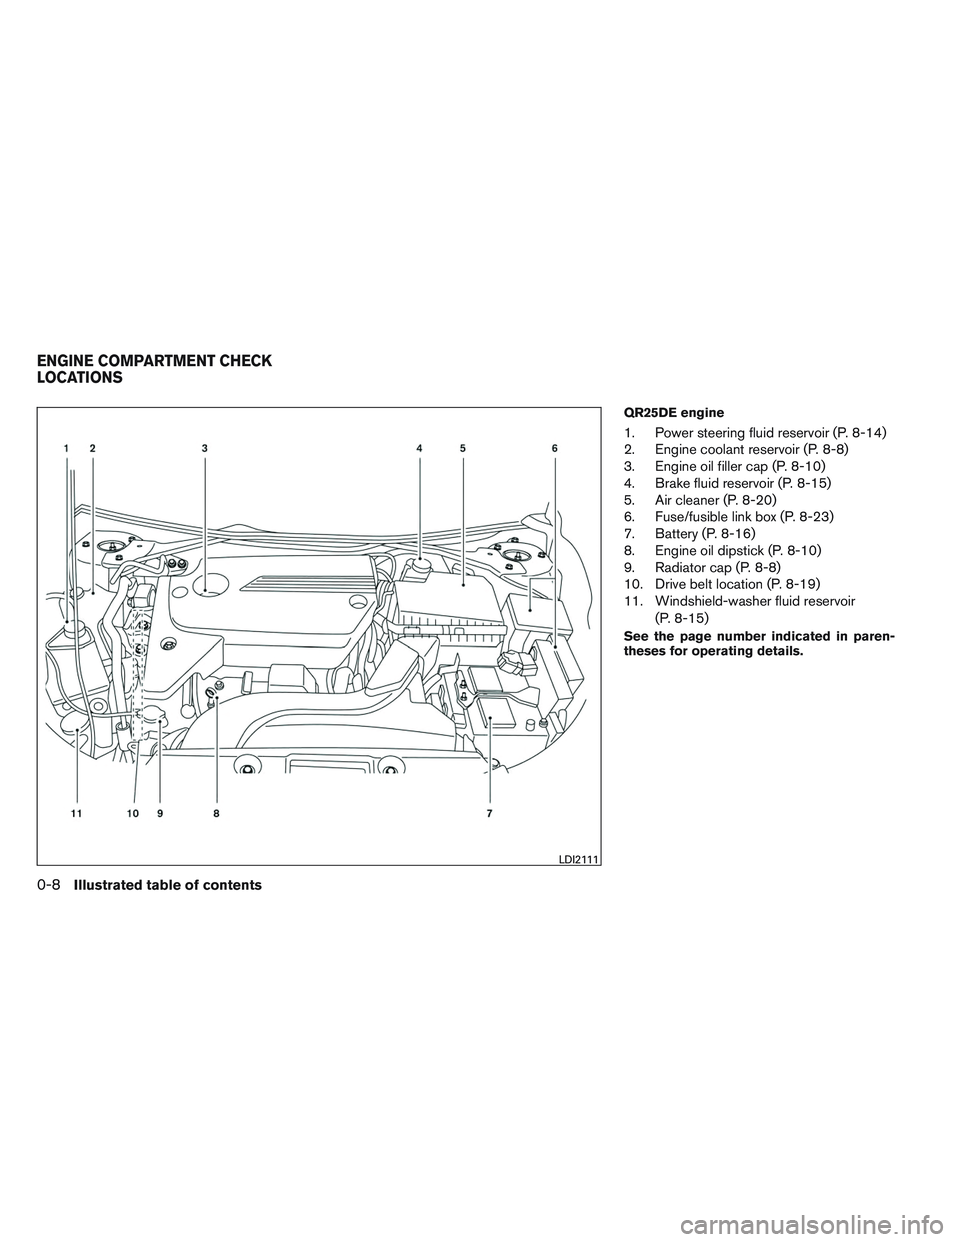 NISSAN ALTIMA SEDAN 2013  Owners Manual QR25DE engine
1. Power steering fluid reservoir (P. 8-14)
2. Engine coolant reservoir (P. 8-8)
3. Engine oil filler cap (P. 8-10)
4. Brake fluid reservoir (P. 8-15)
5. Air cleaner (P. 8-20)
6. Fuse/fu